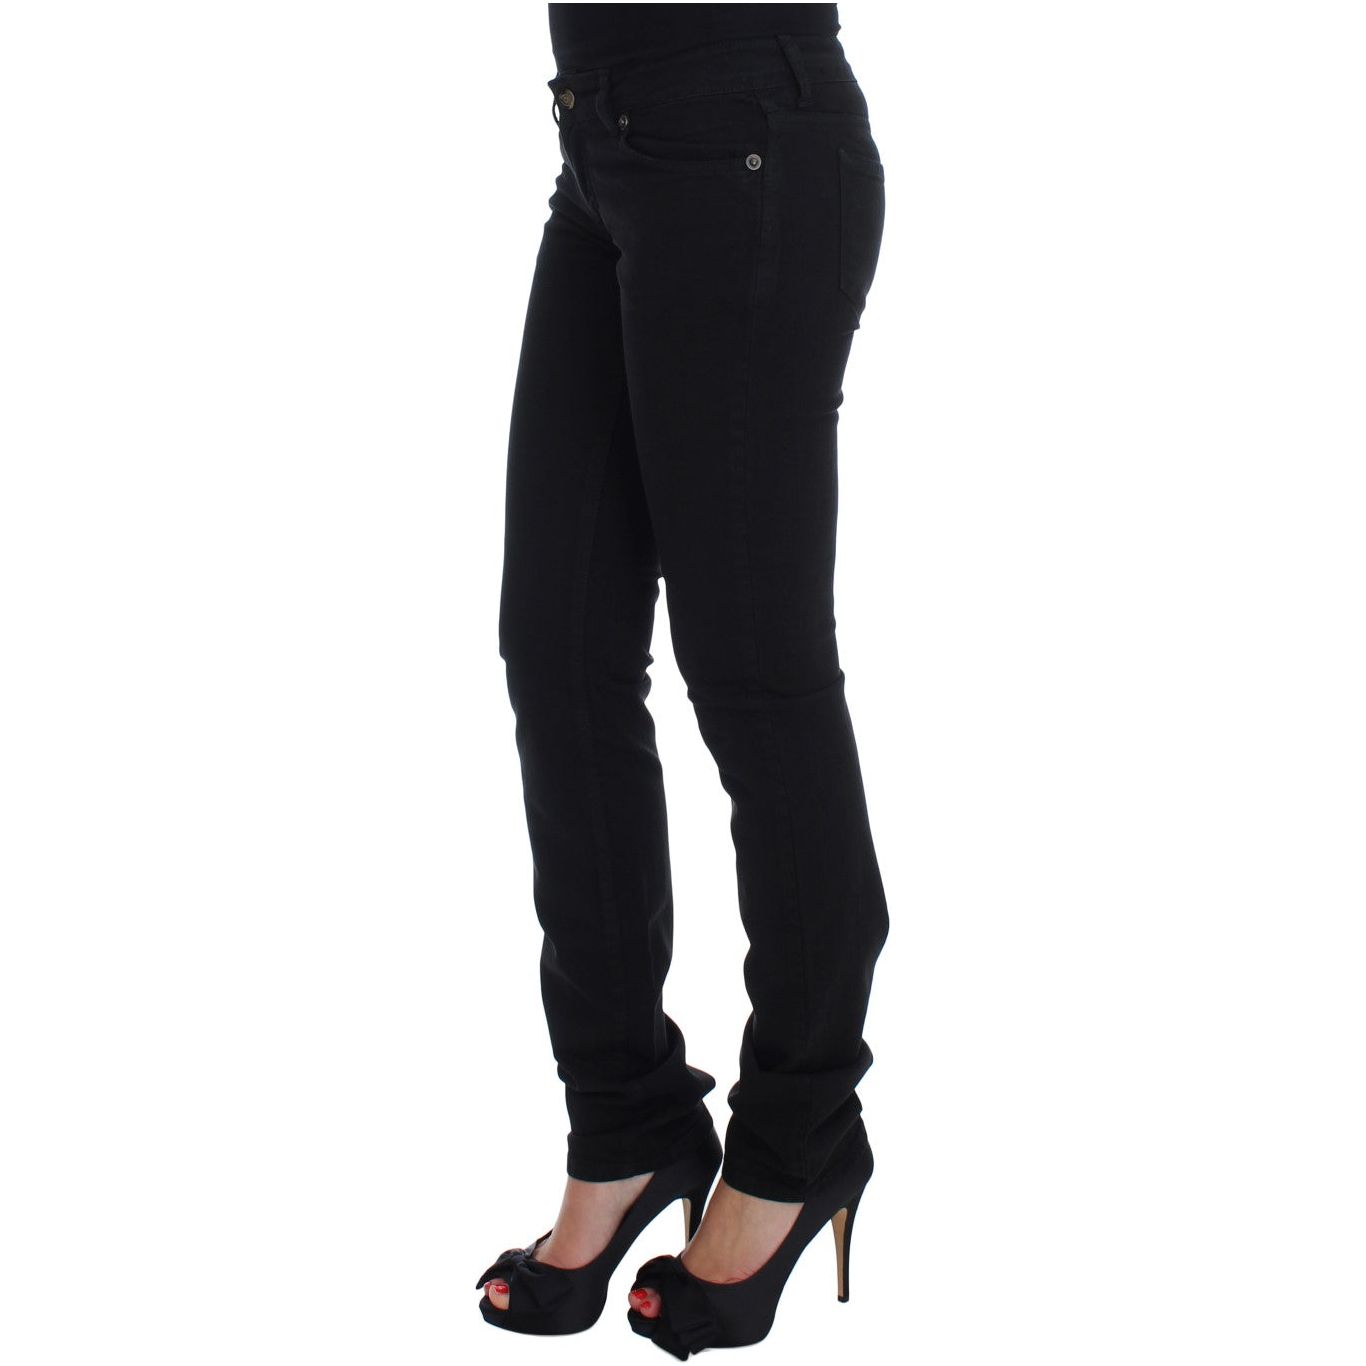 Cavalli Chic Slim Skinny Black Jeans black-cotton-stretch-slim-skinny-fit-jeans Jeans & Pants